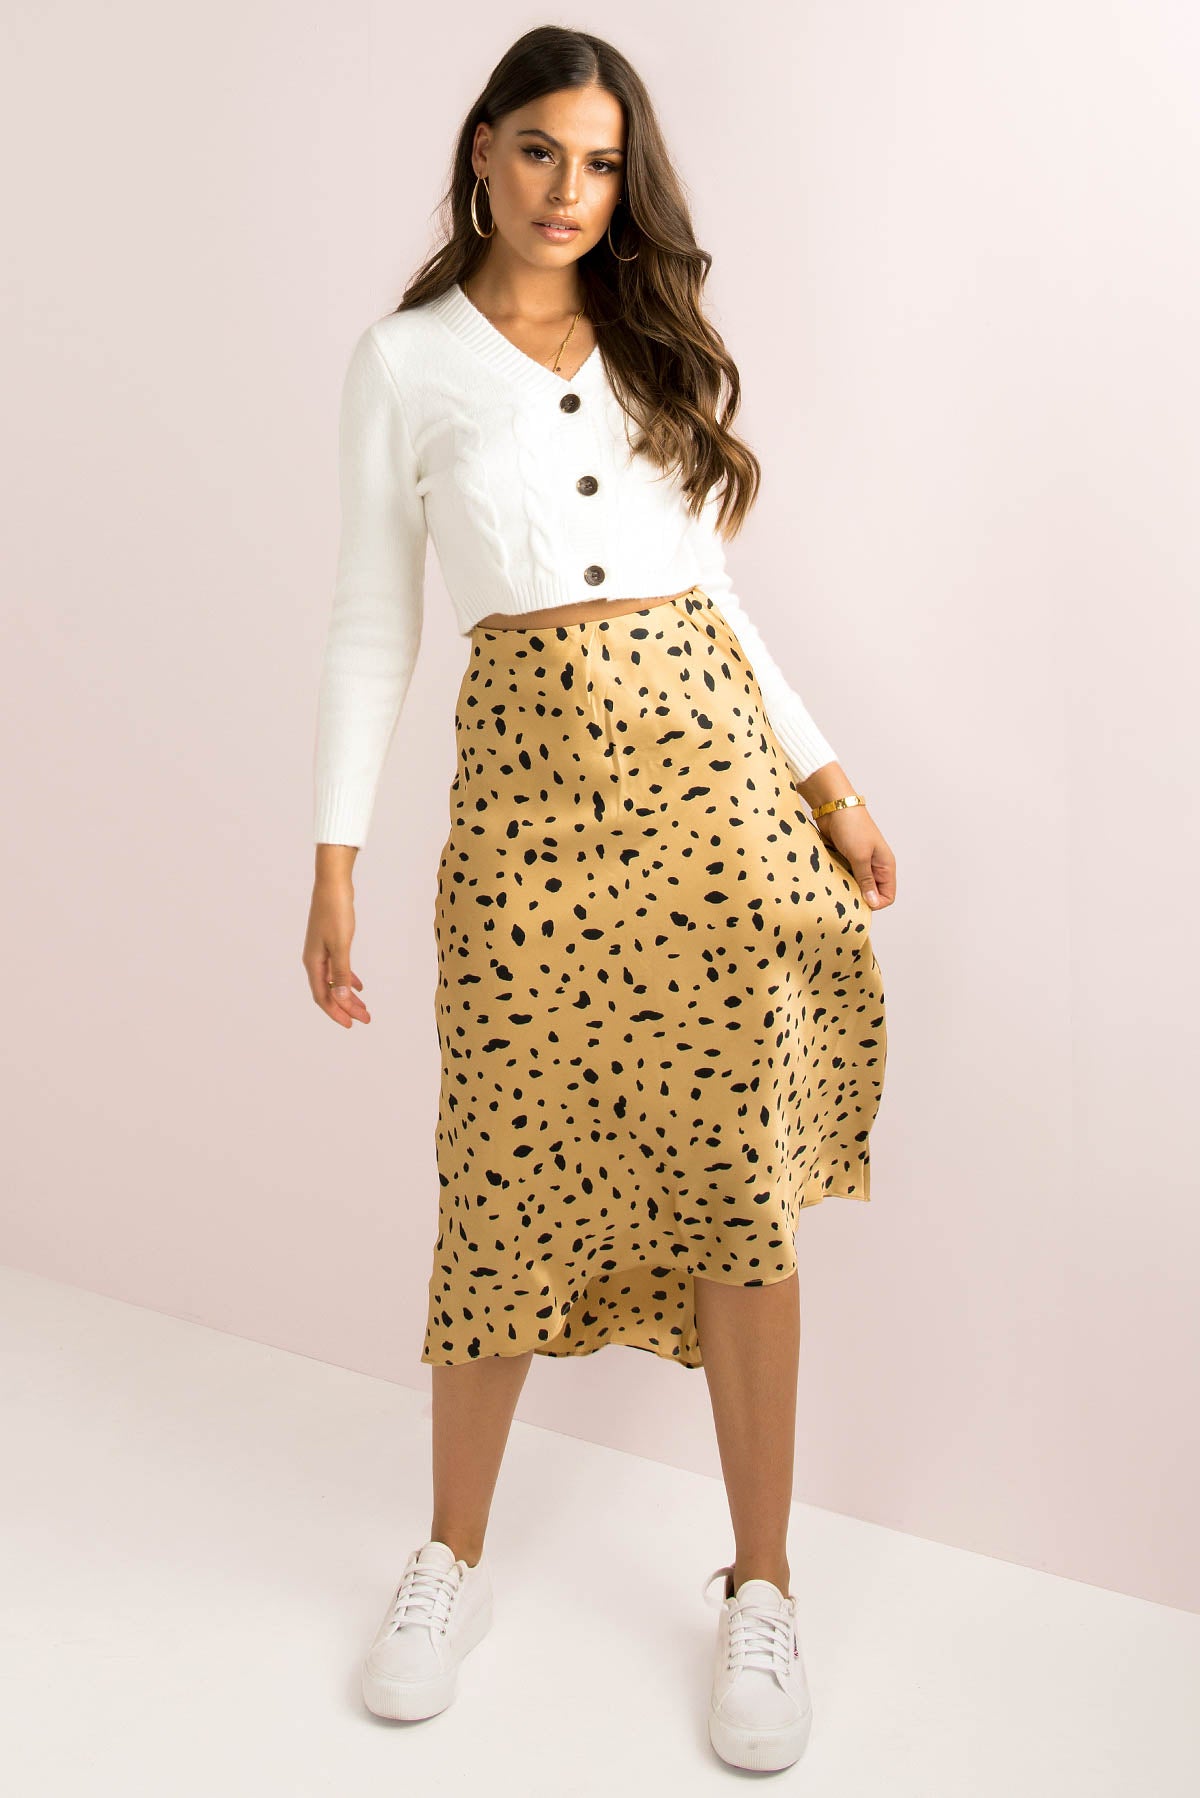 Regan Skirt / Leopard